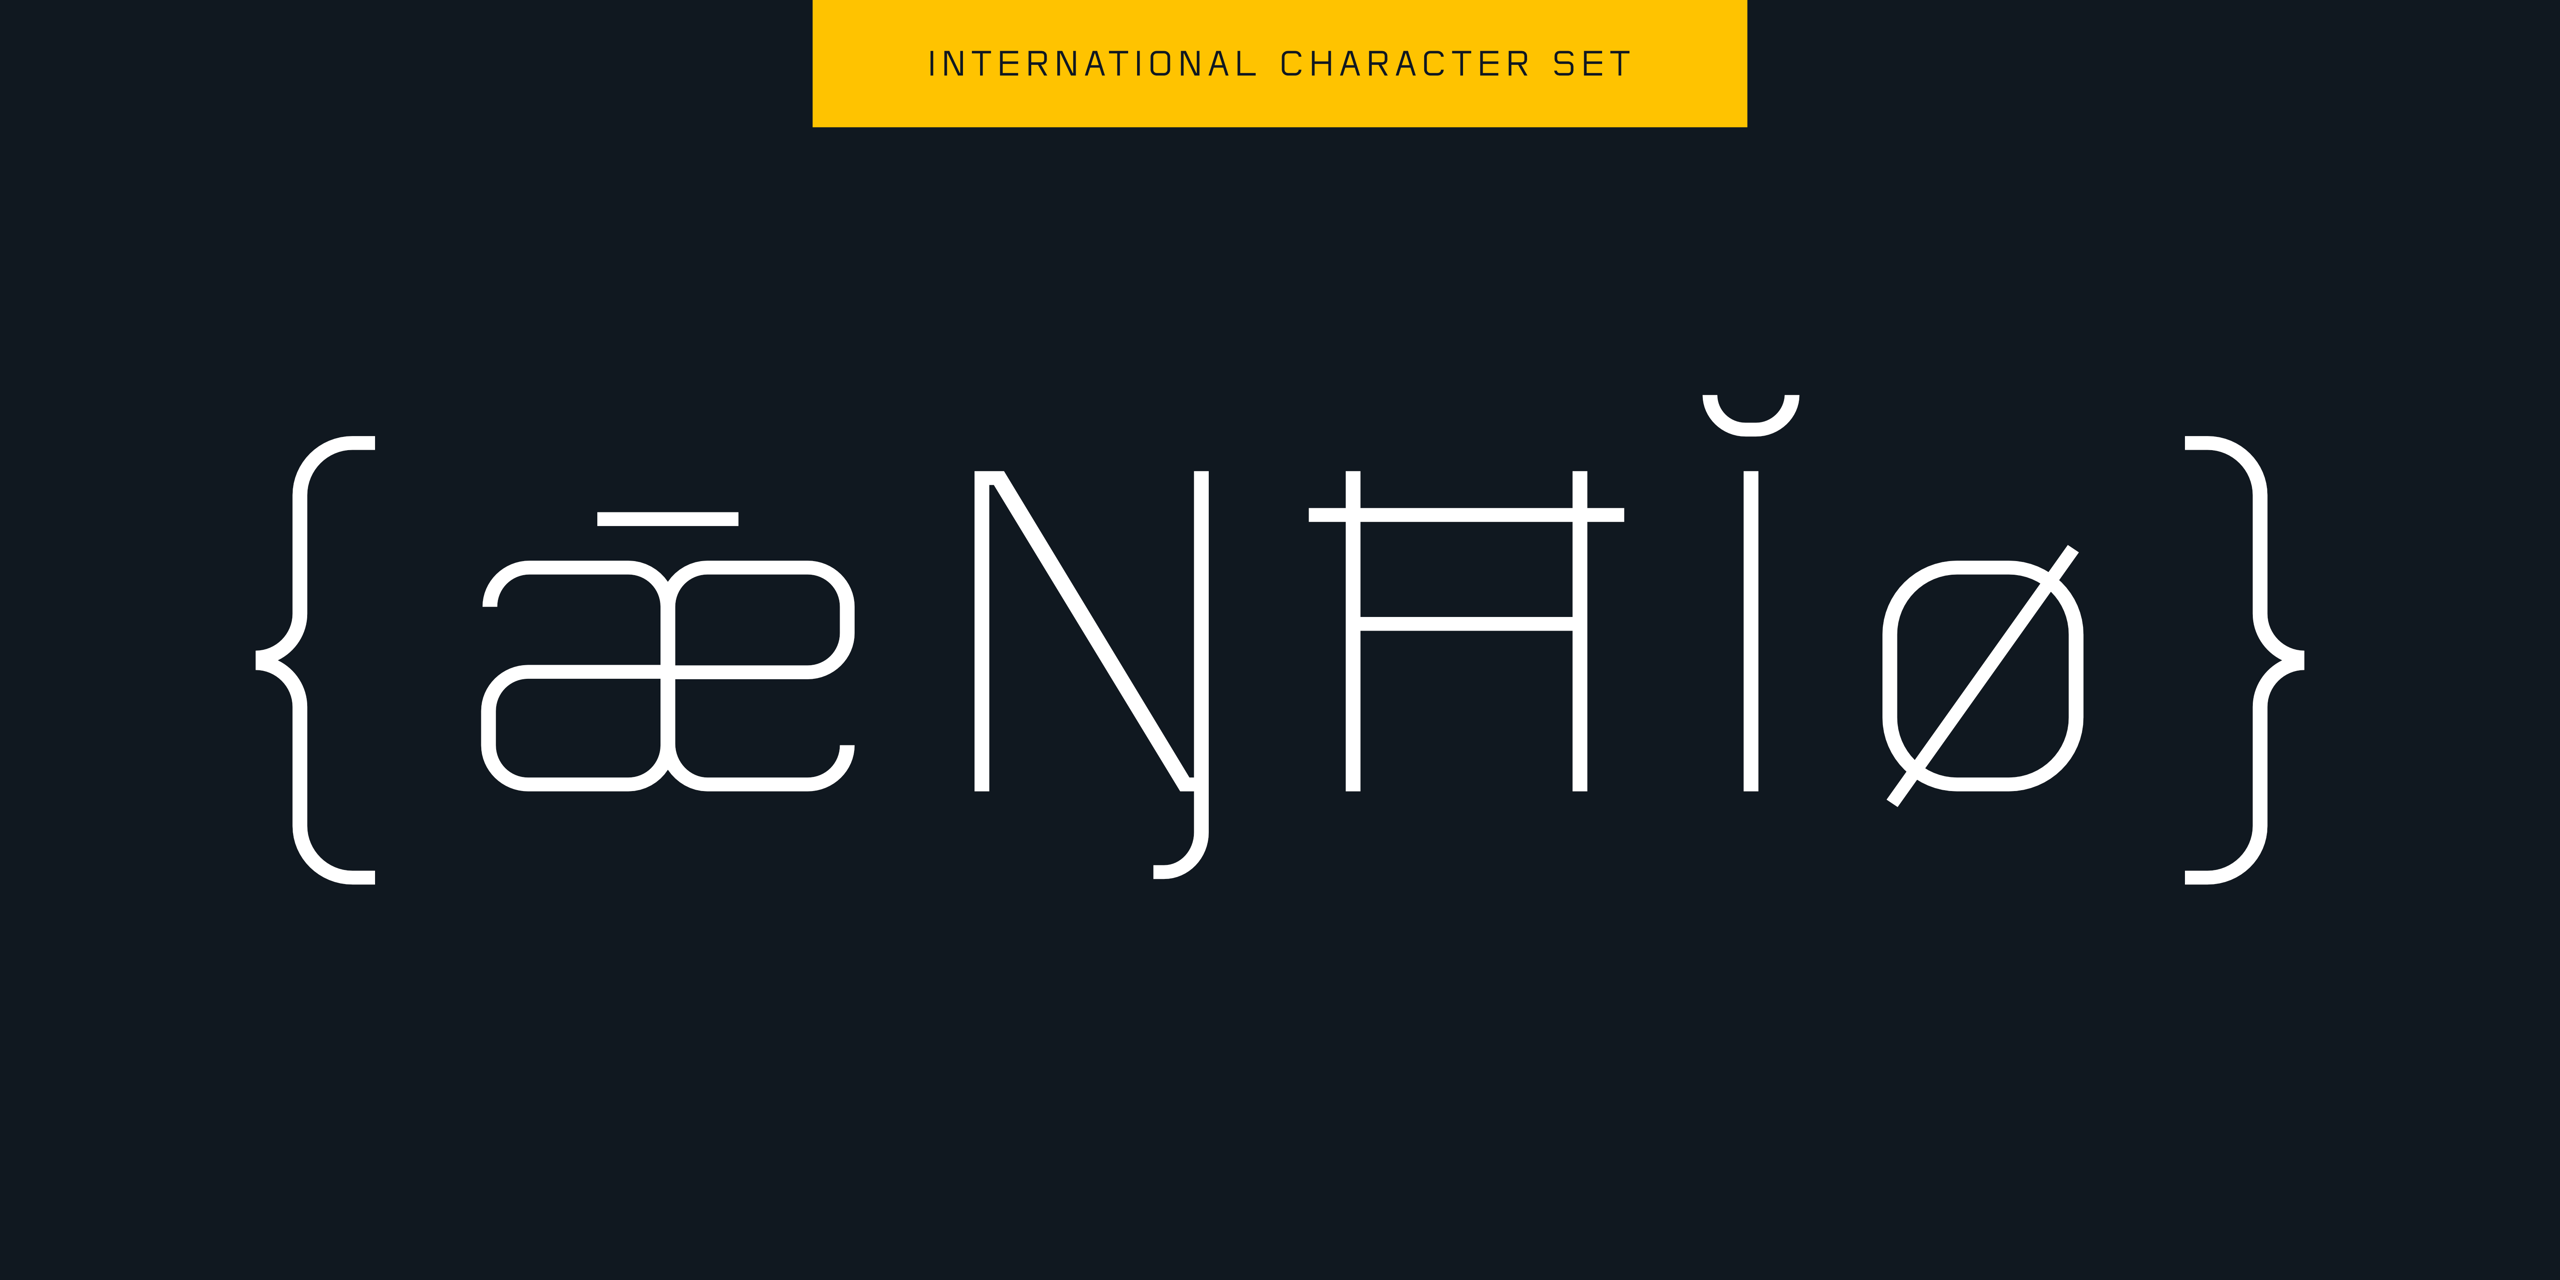 Flat Sans Typeface - international character set.